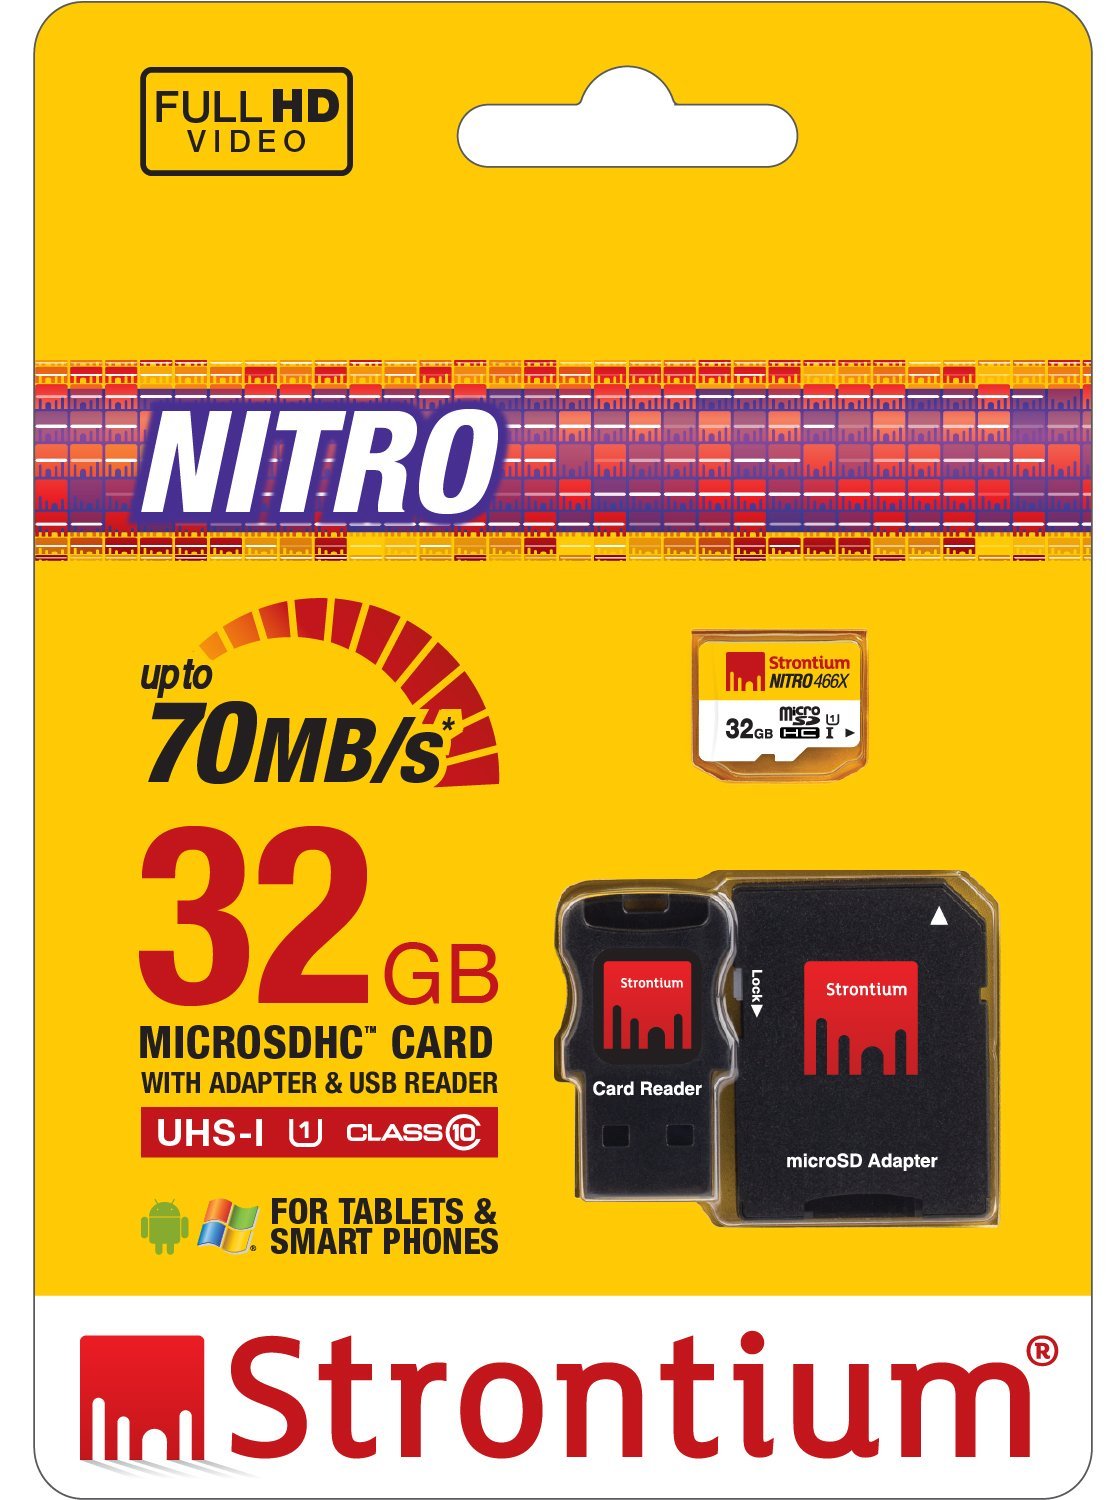 nitro 32 bit